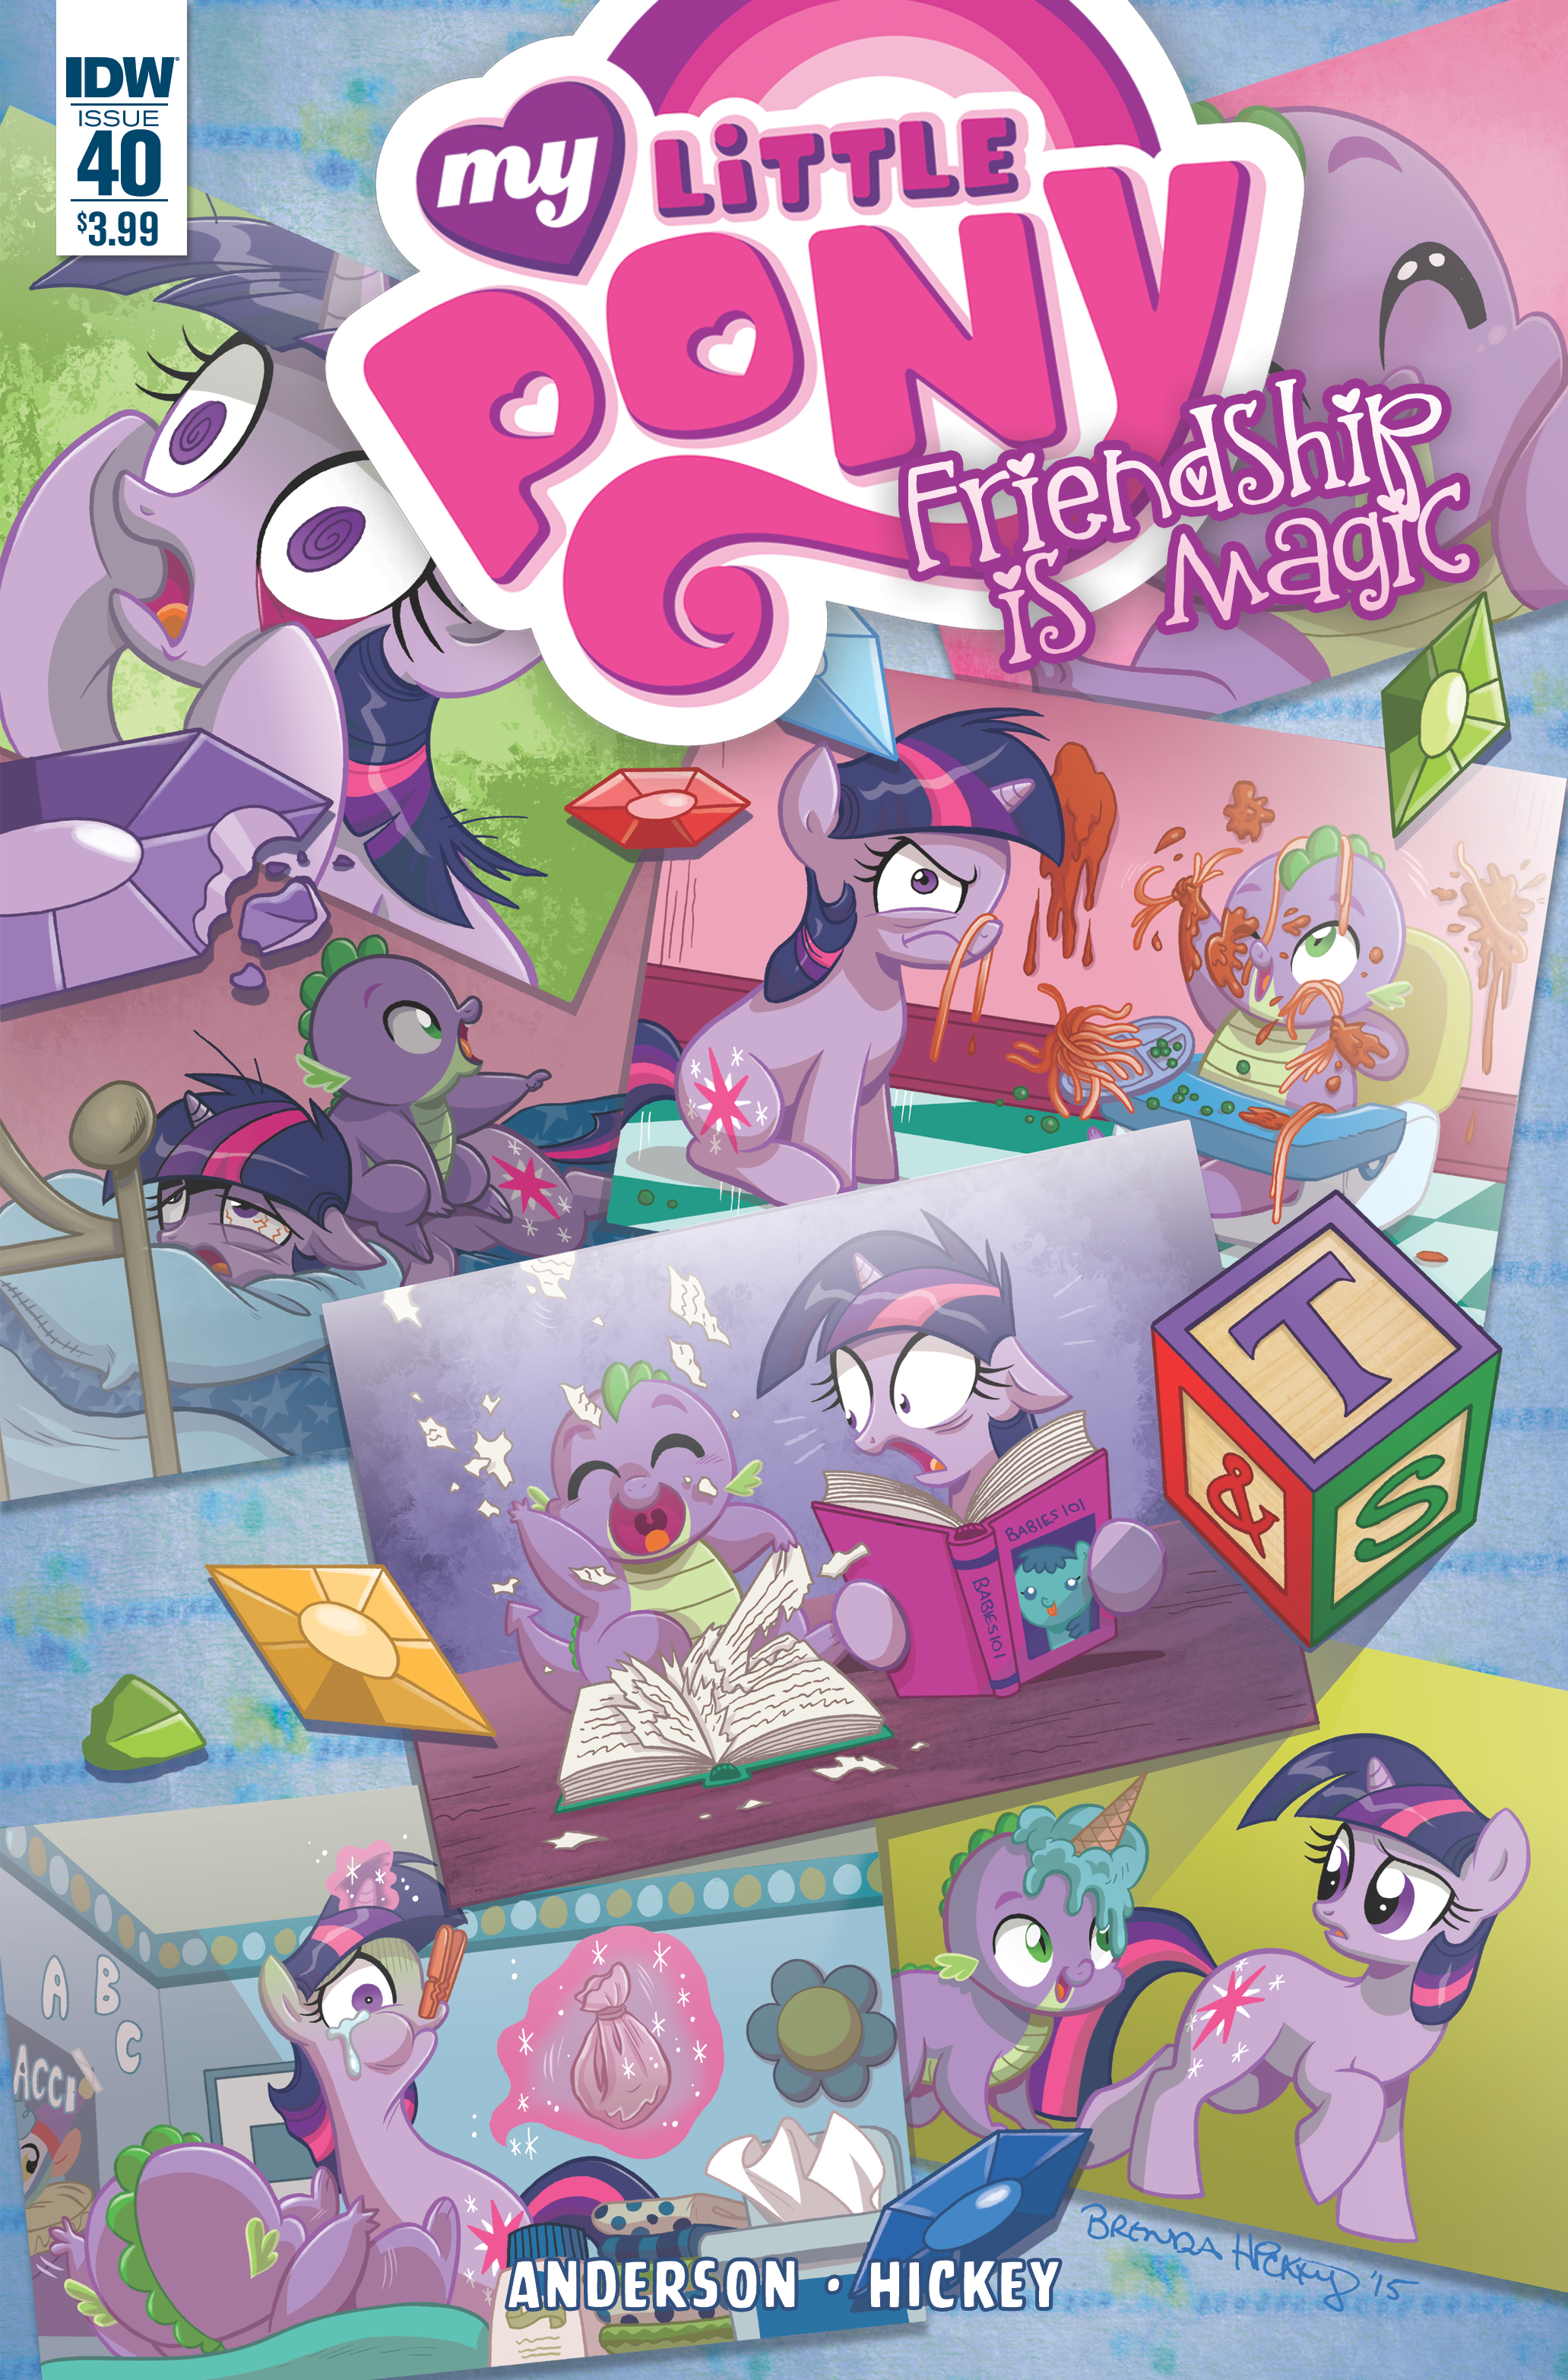 Friendship is Magic Issue 40 | My Little Pony Friendship